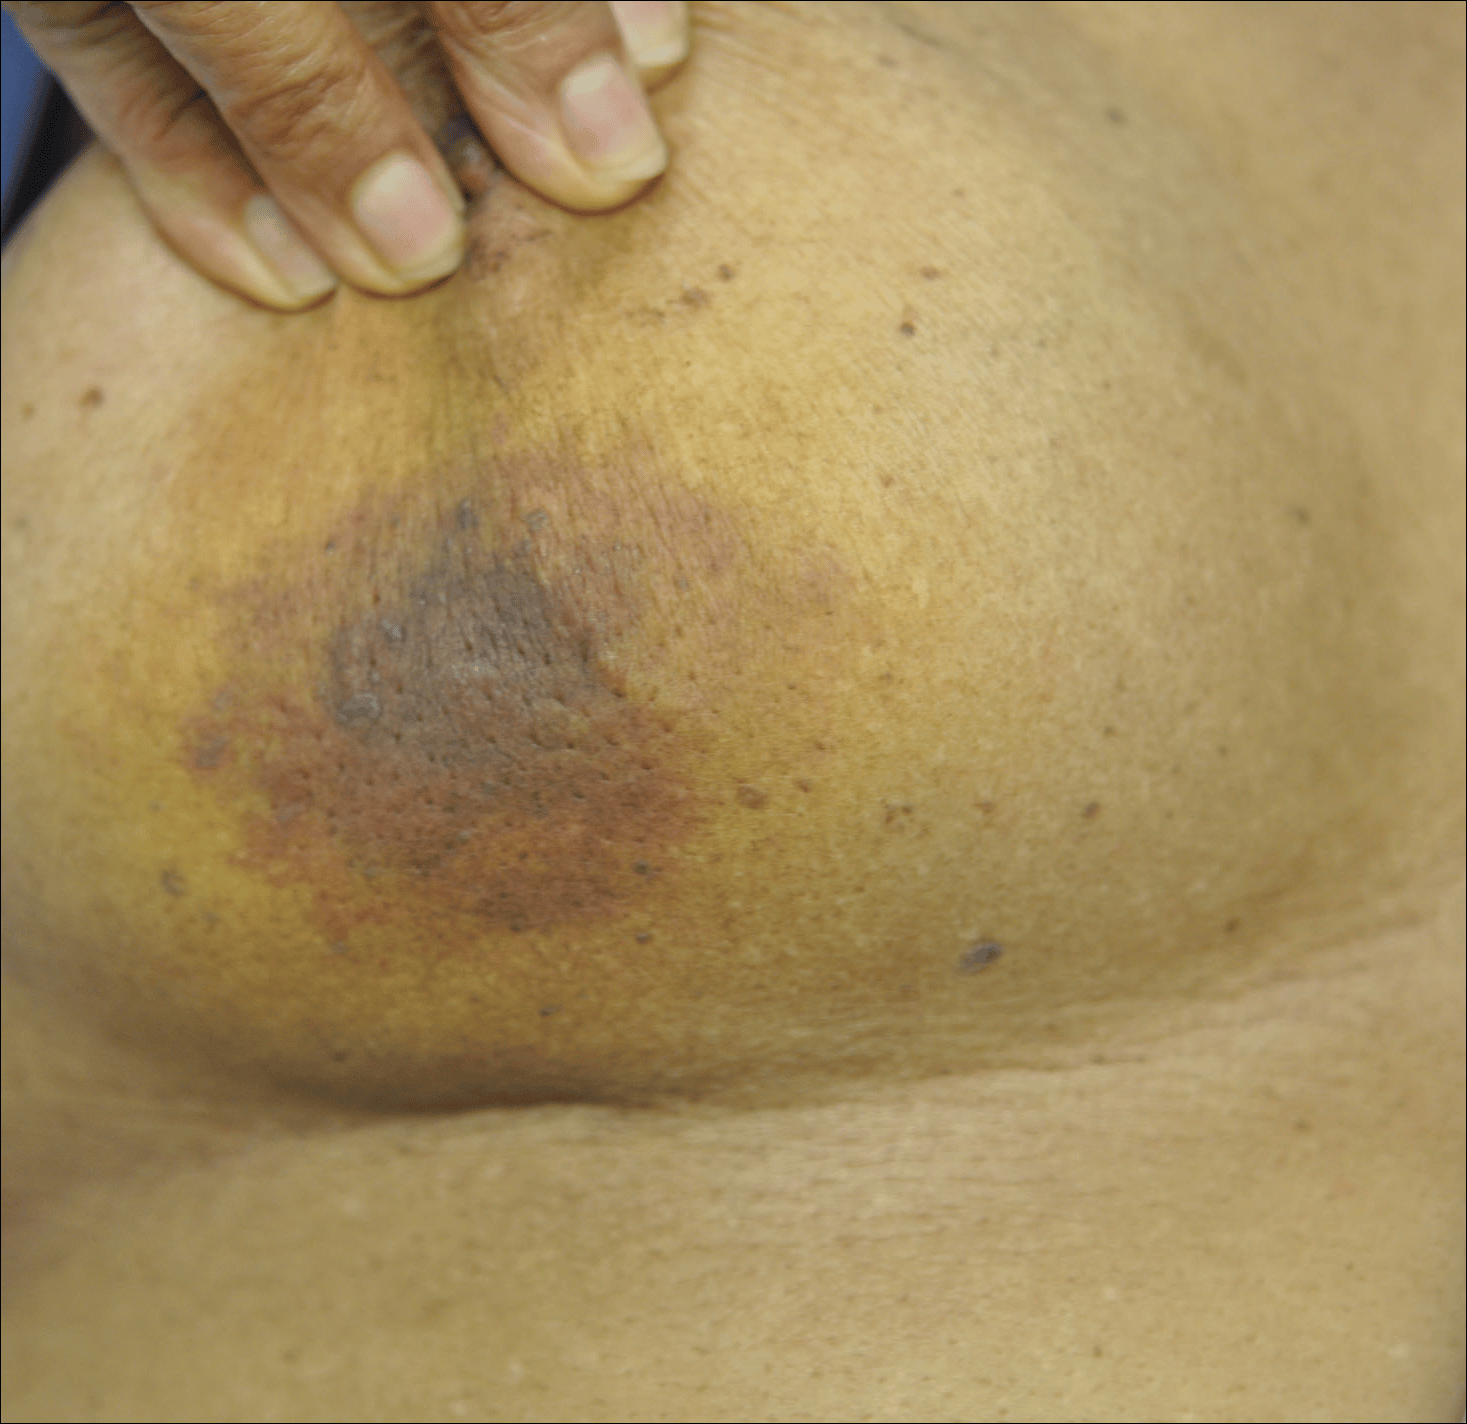 Enlarging Breast Lesion